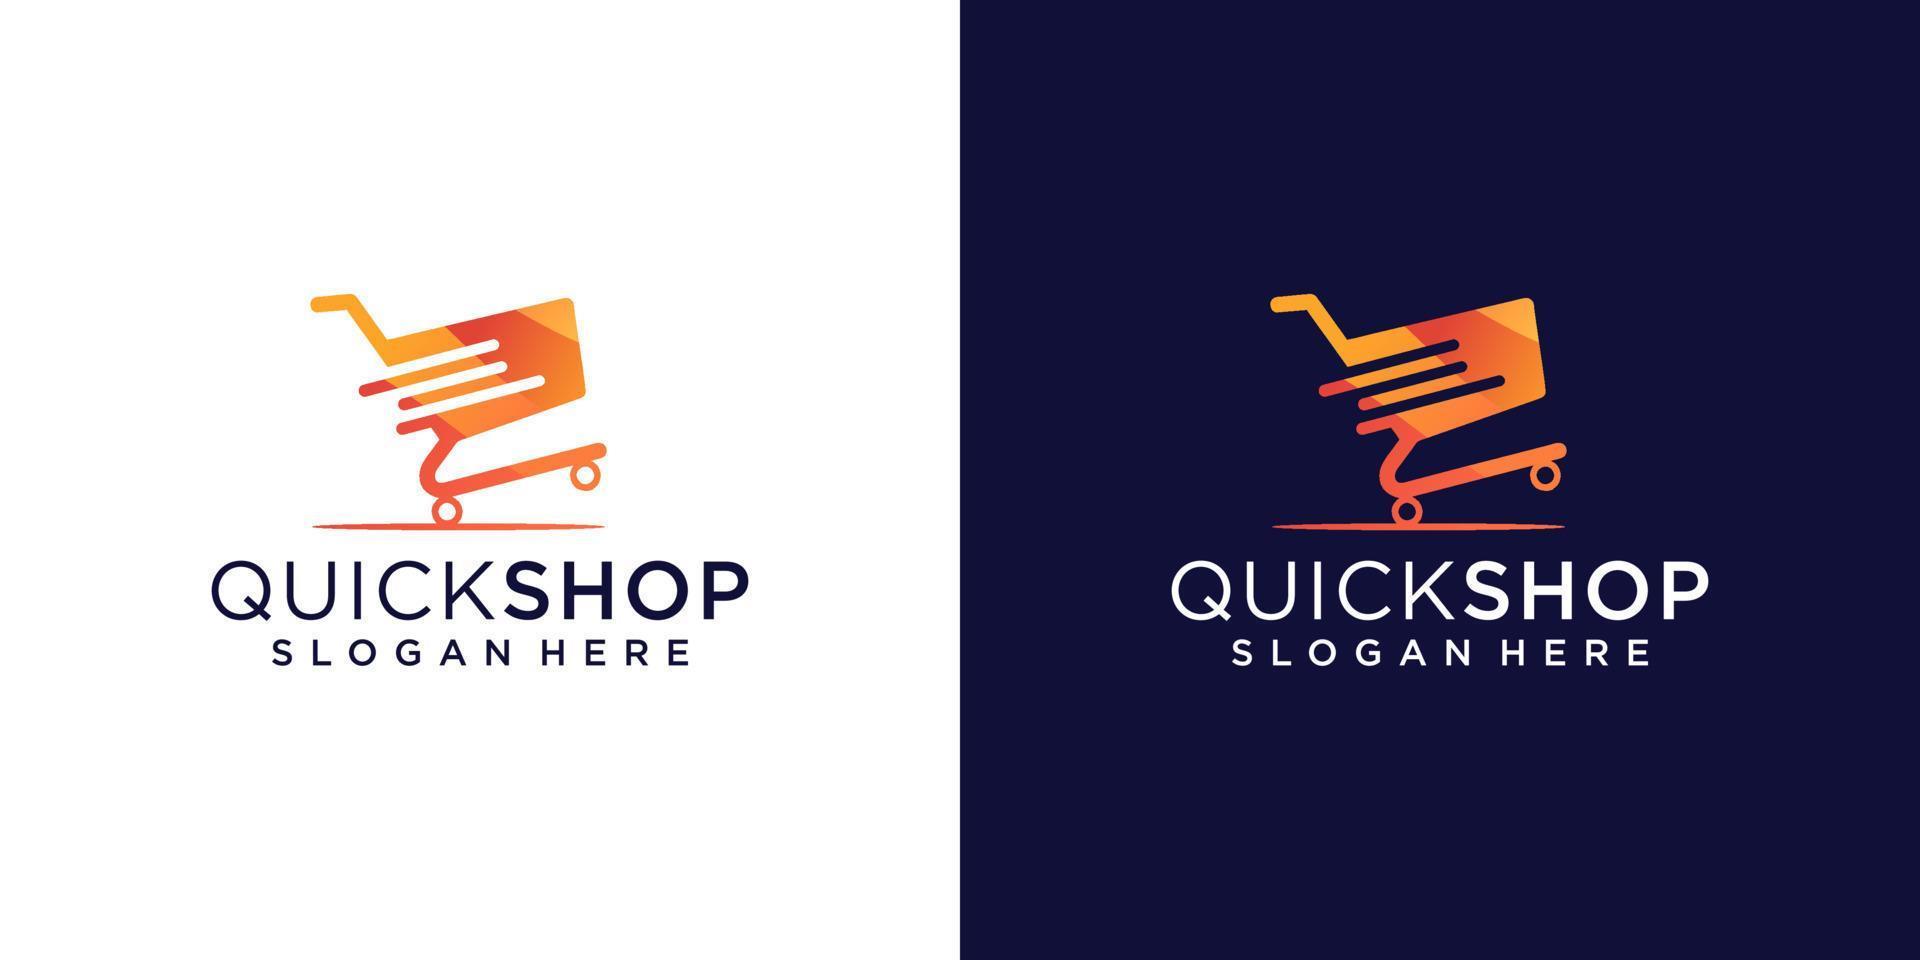 Quick-Shop-Logo-Design im Farbverlauf-Konzept vektor